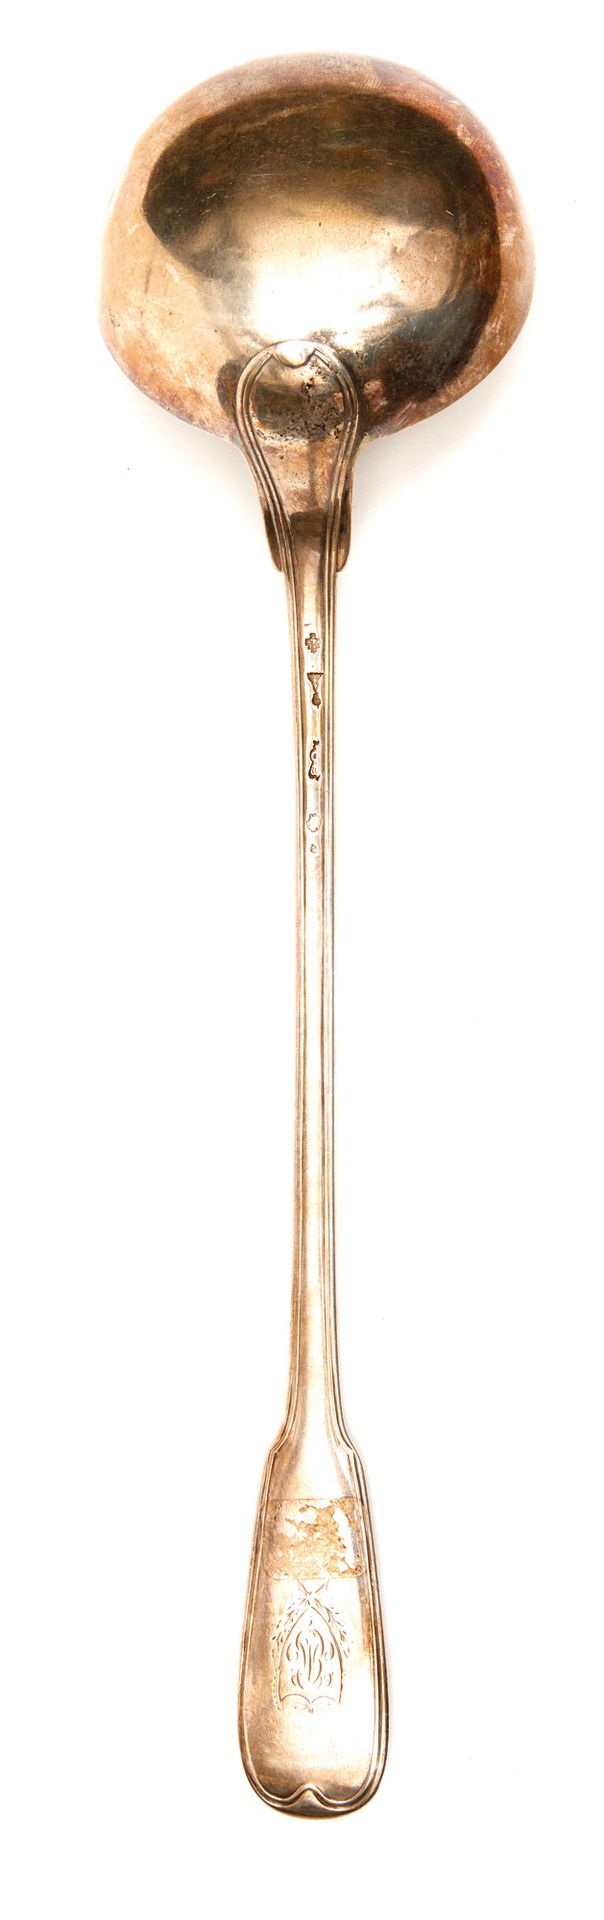 LOUCHE EN ARGENT 银勺子

作者：Pierre-Nicolas Sommé，巴黎，1788年

小提琴圆片模型，在盾牌上刻有首字母 "ME"，印&hellip;